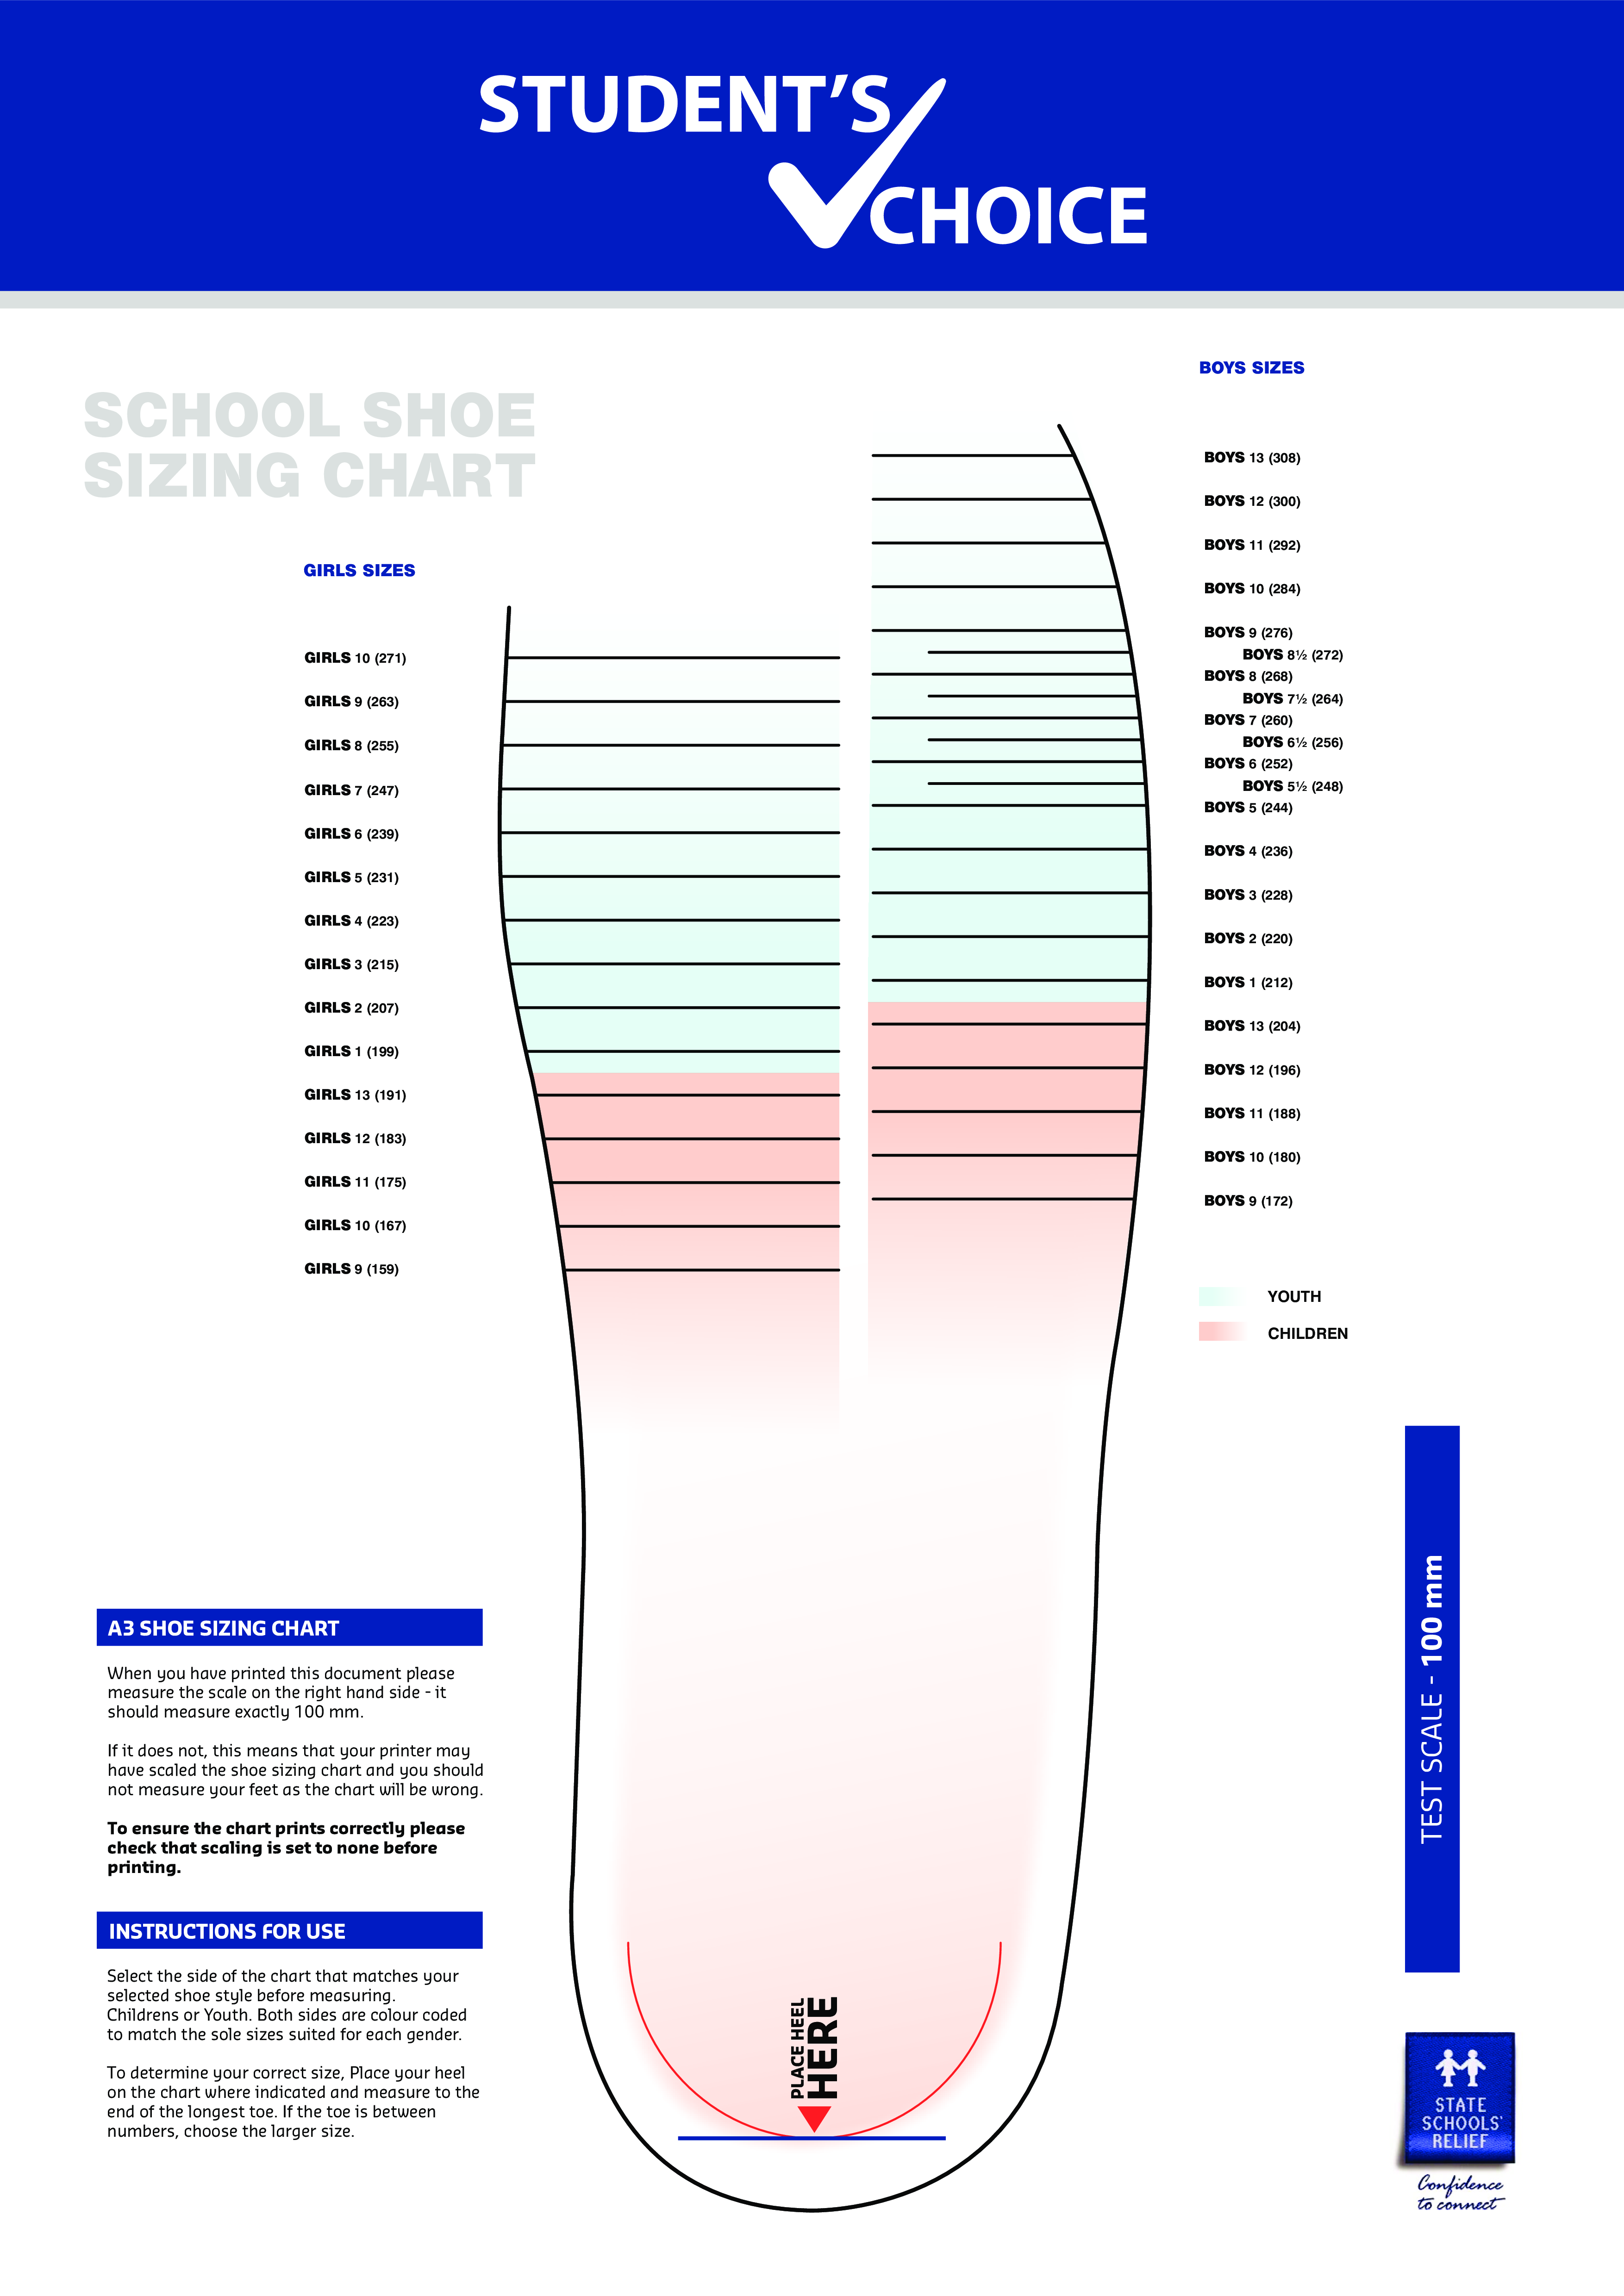 Download Printable School Shoe Size Chart | Templates at allbusinesstemplates.com